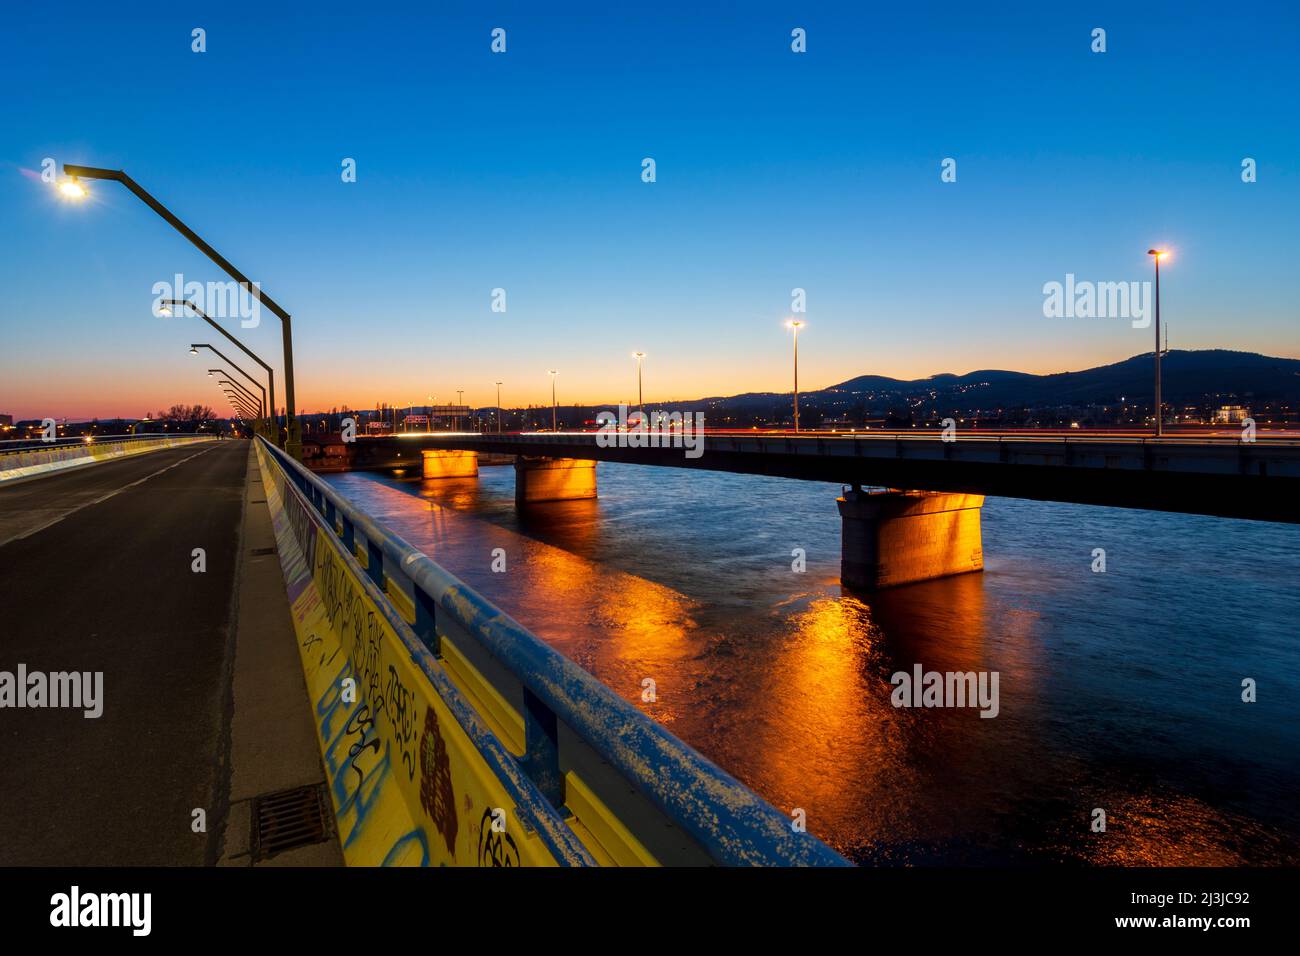 Freeway bridge nordbrucke hi-res stock photography and images - Alamy